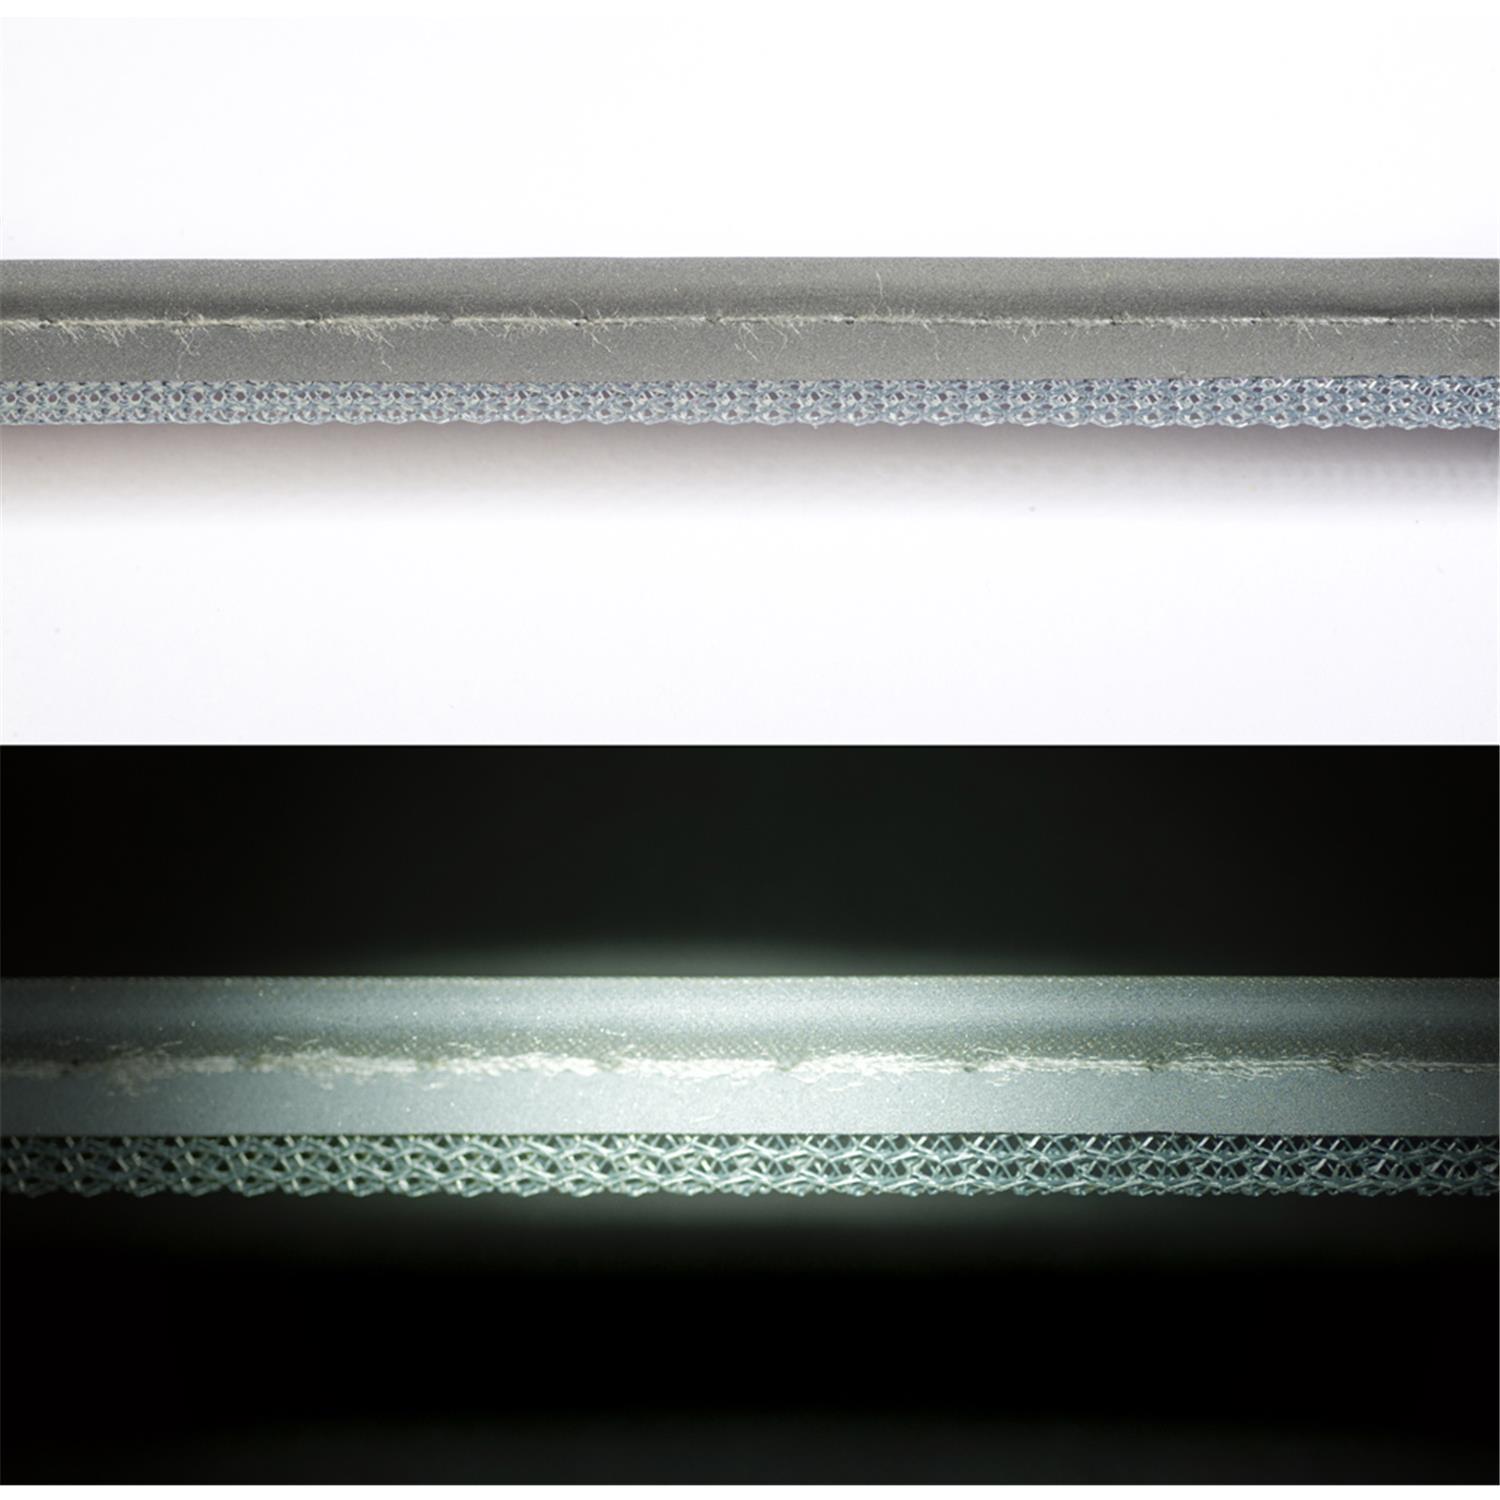 Paspelband mit Reflektions-Leuchtband und Annähband, 5m / Annähband grau